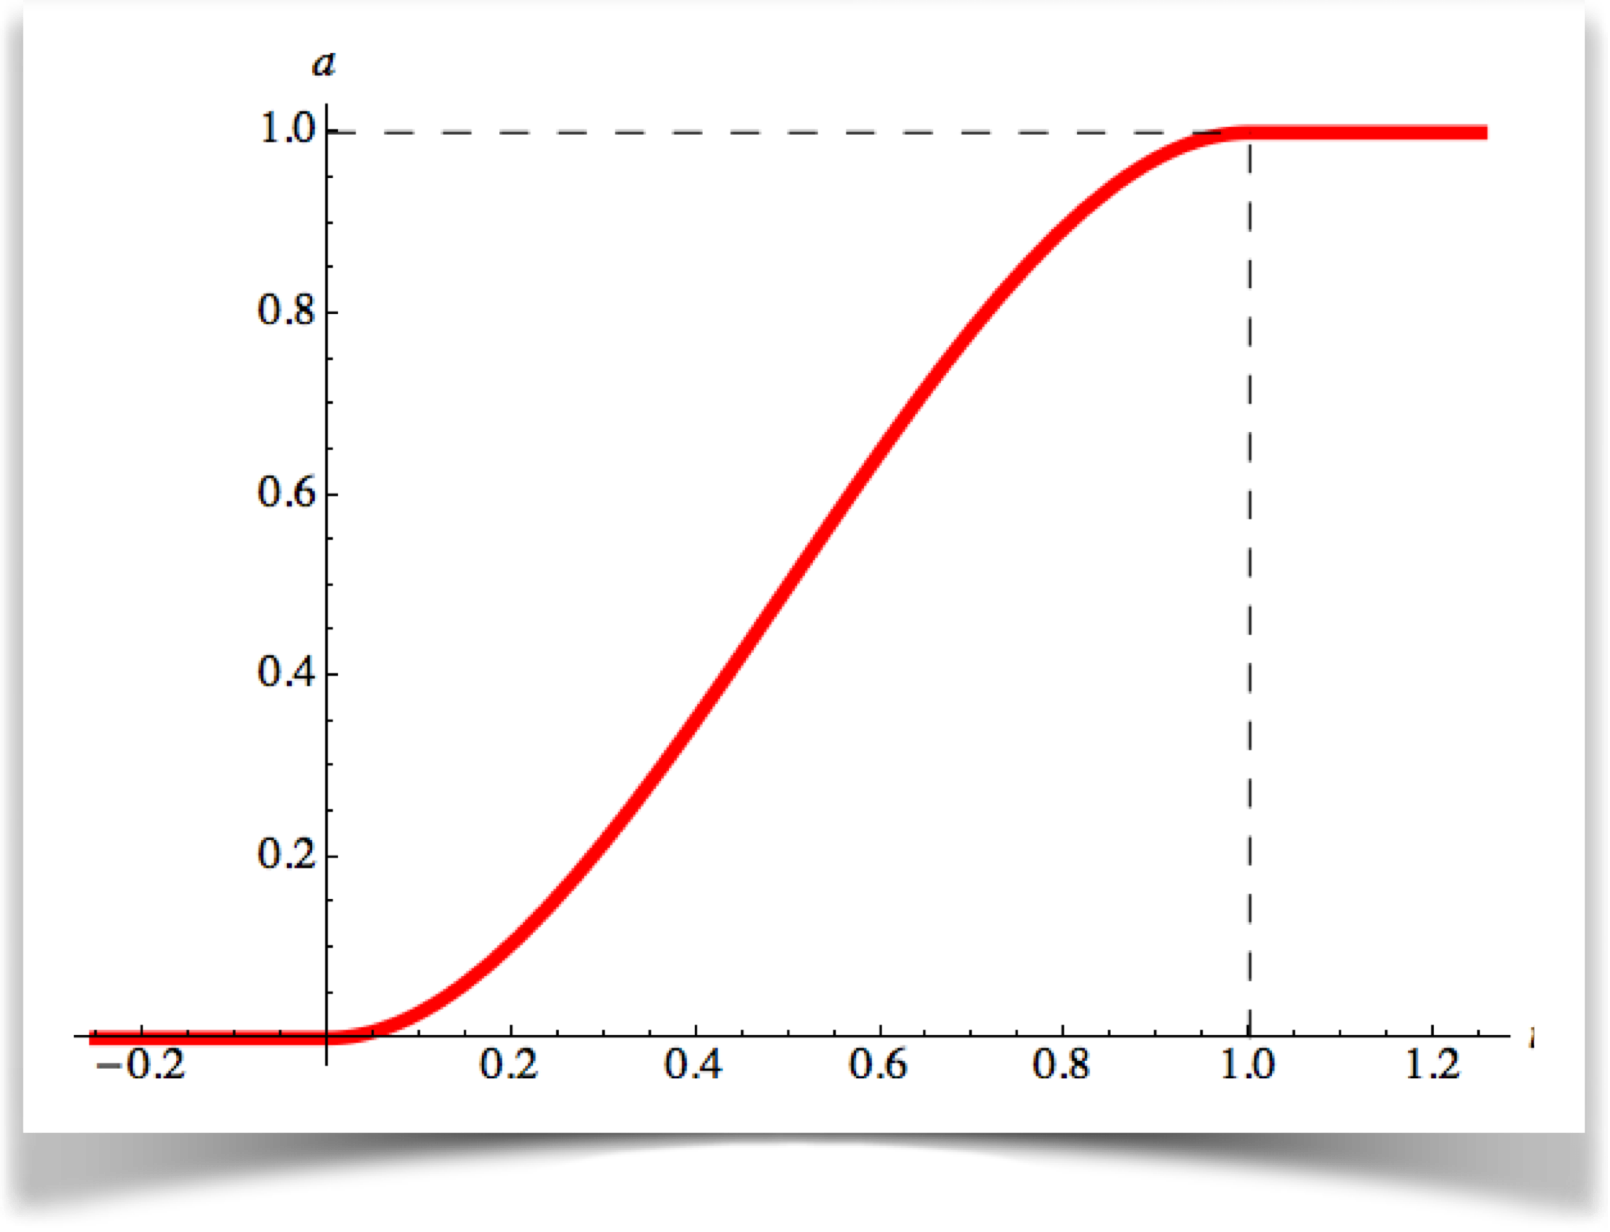 An S-shaped curve